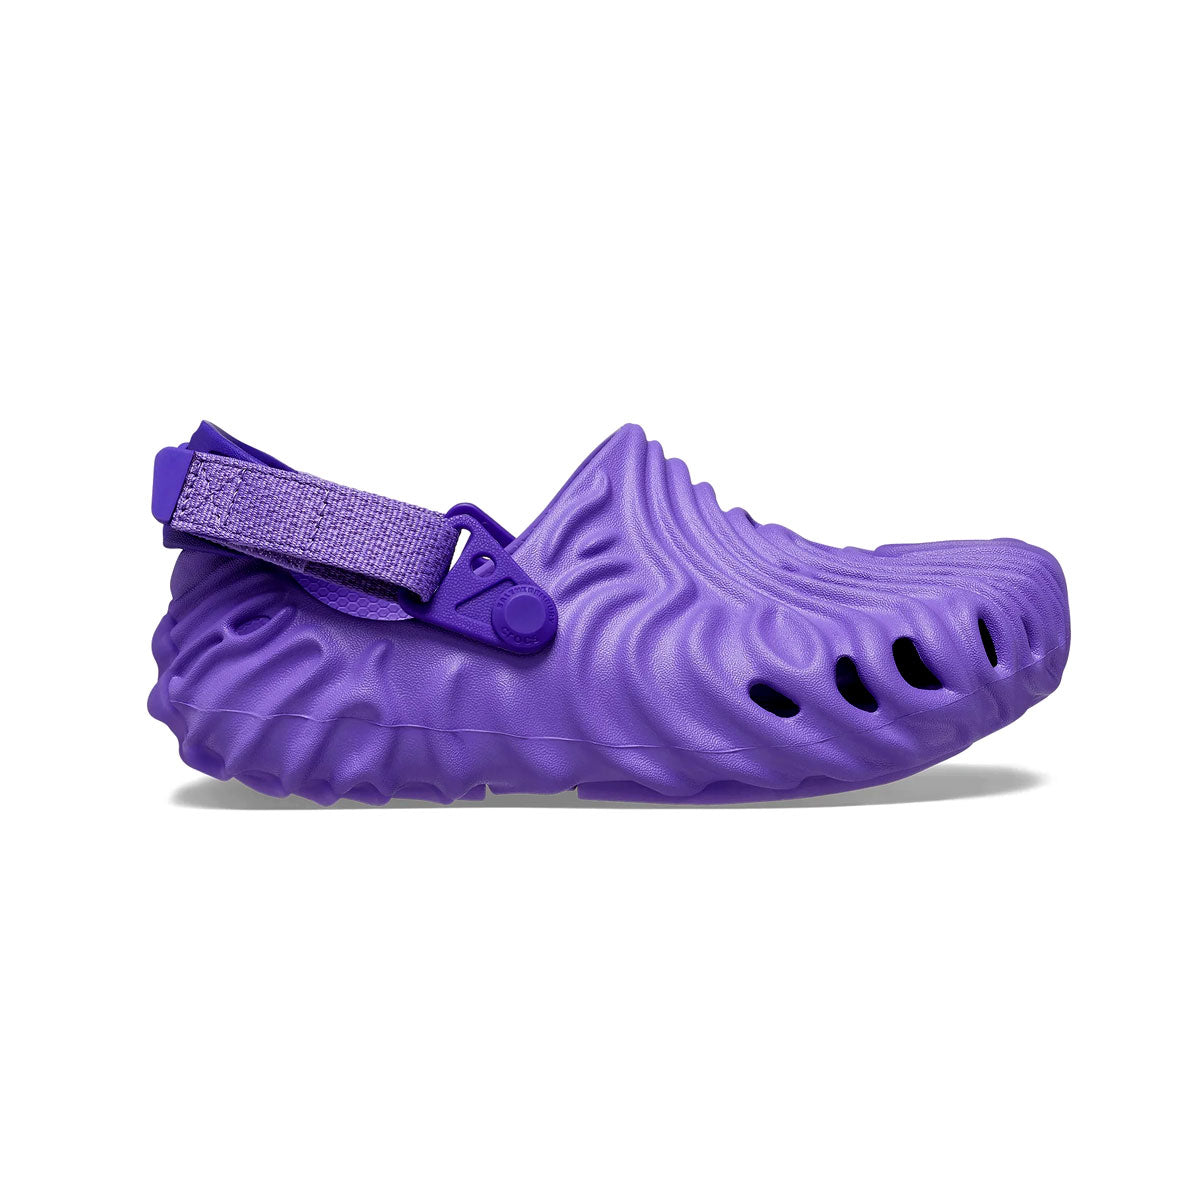 Salehe Bembury x Crocs Pollex Clog Kids "Dewberry" - KickzStore